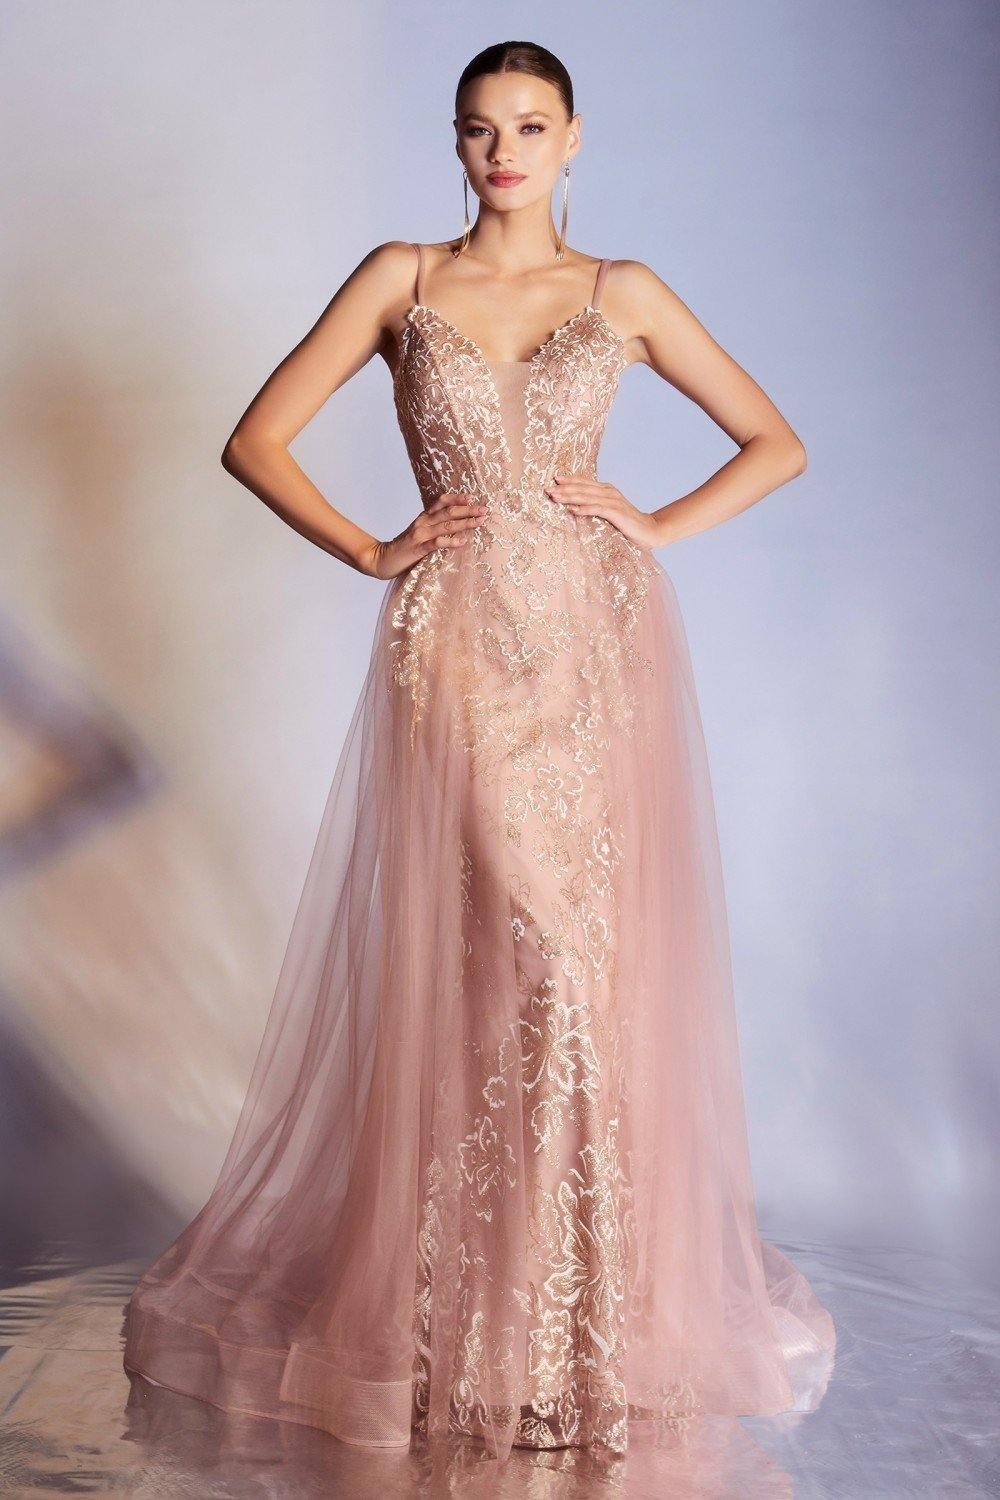 Glitter Long Prom Formal Dress - The Dress Outlet